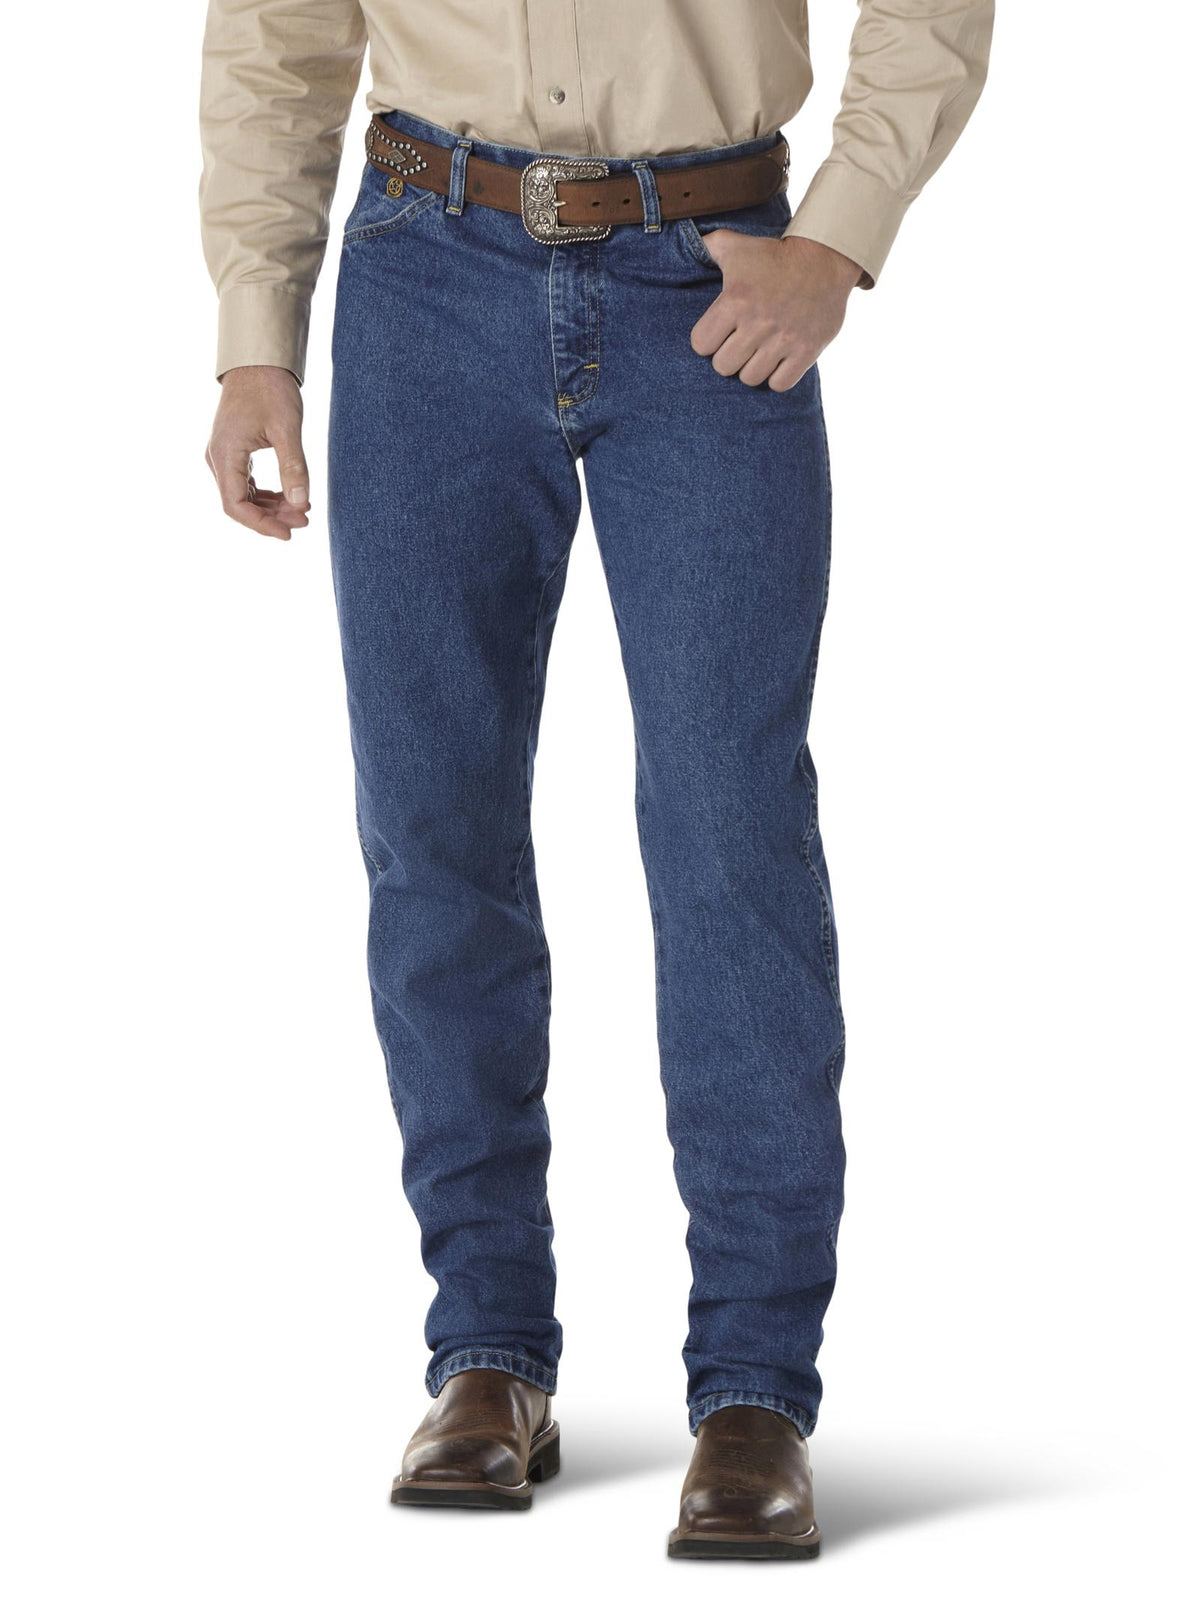 Wrangler Men's George Strait Cowboy Cut Original Fit Jean in Heavyweight Stone Denim